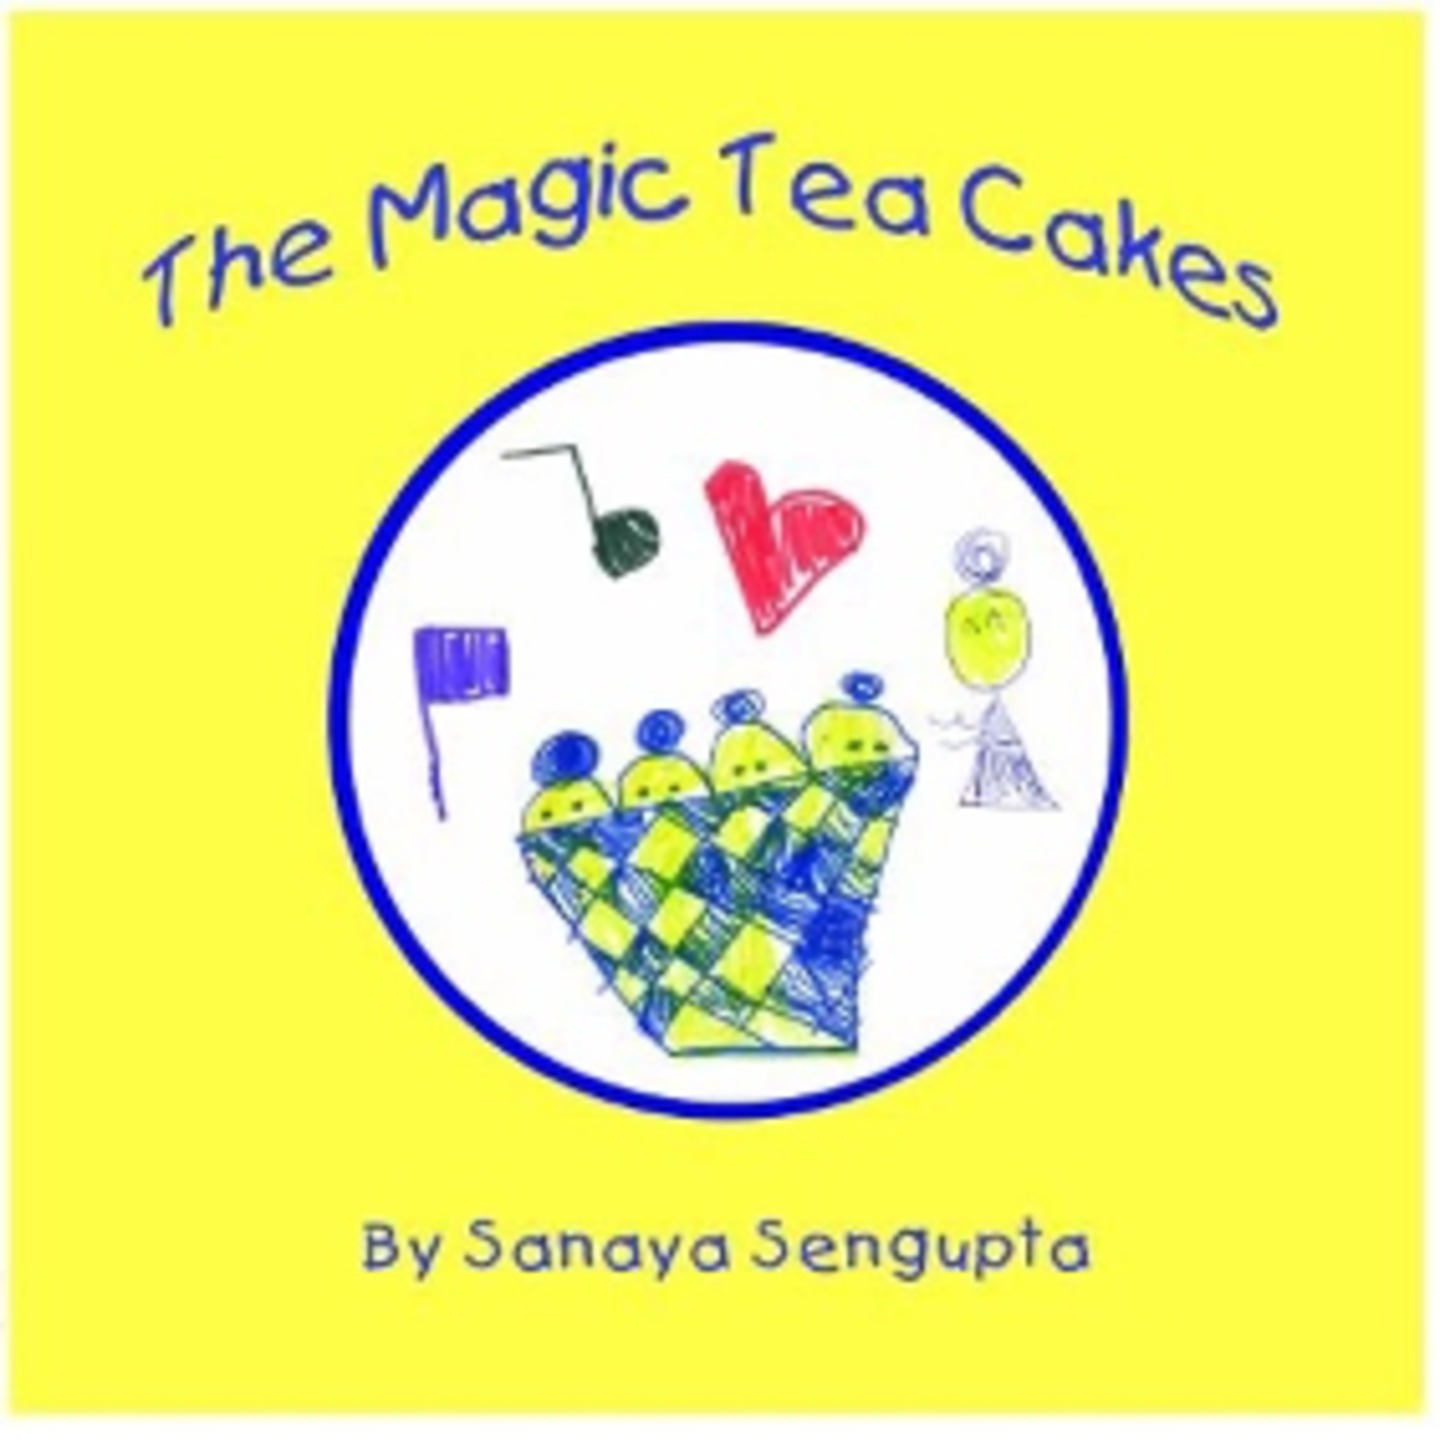 The Magic Tea Cakes by Sanaya Sengupta